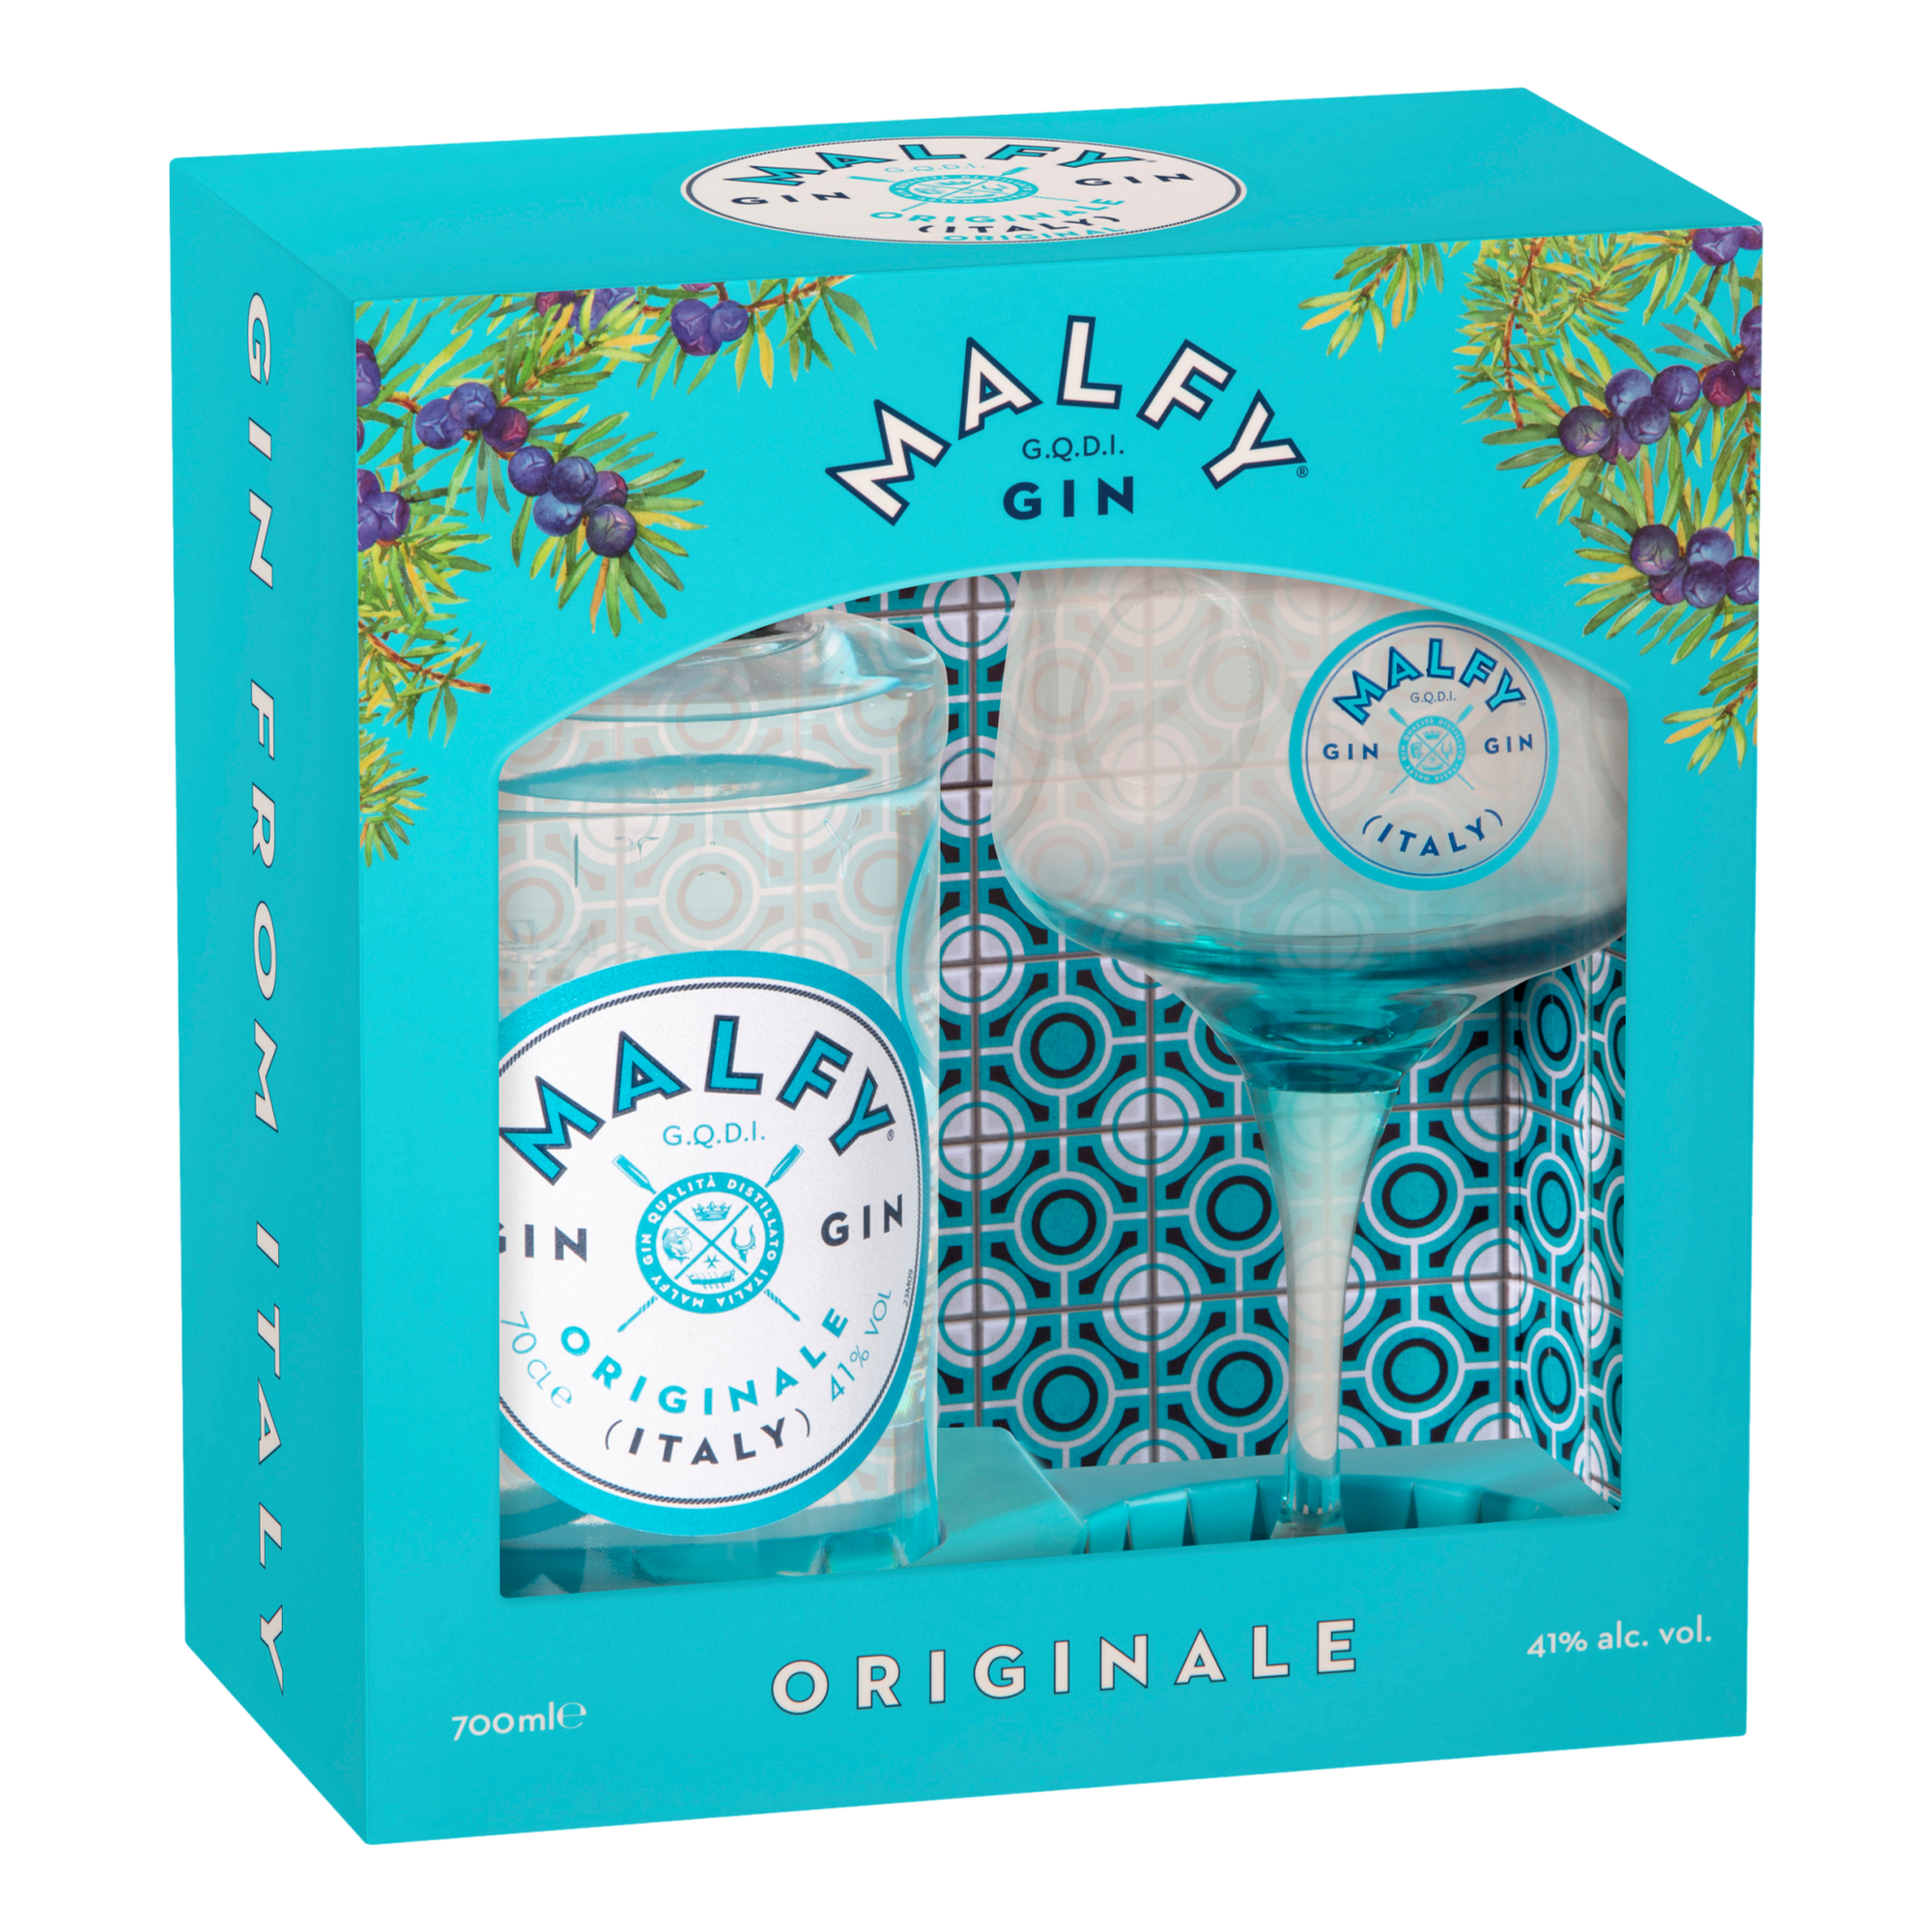 Malfy Originale Gin 700ml + Glass Gift Pack